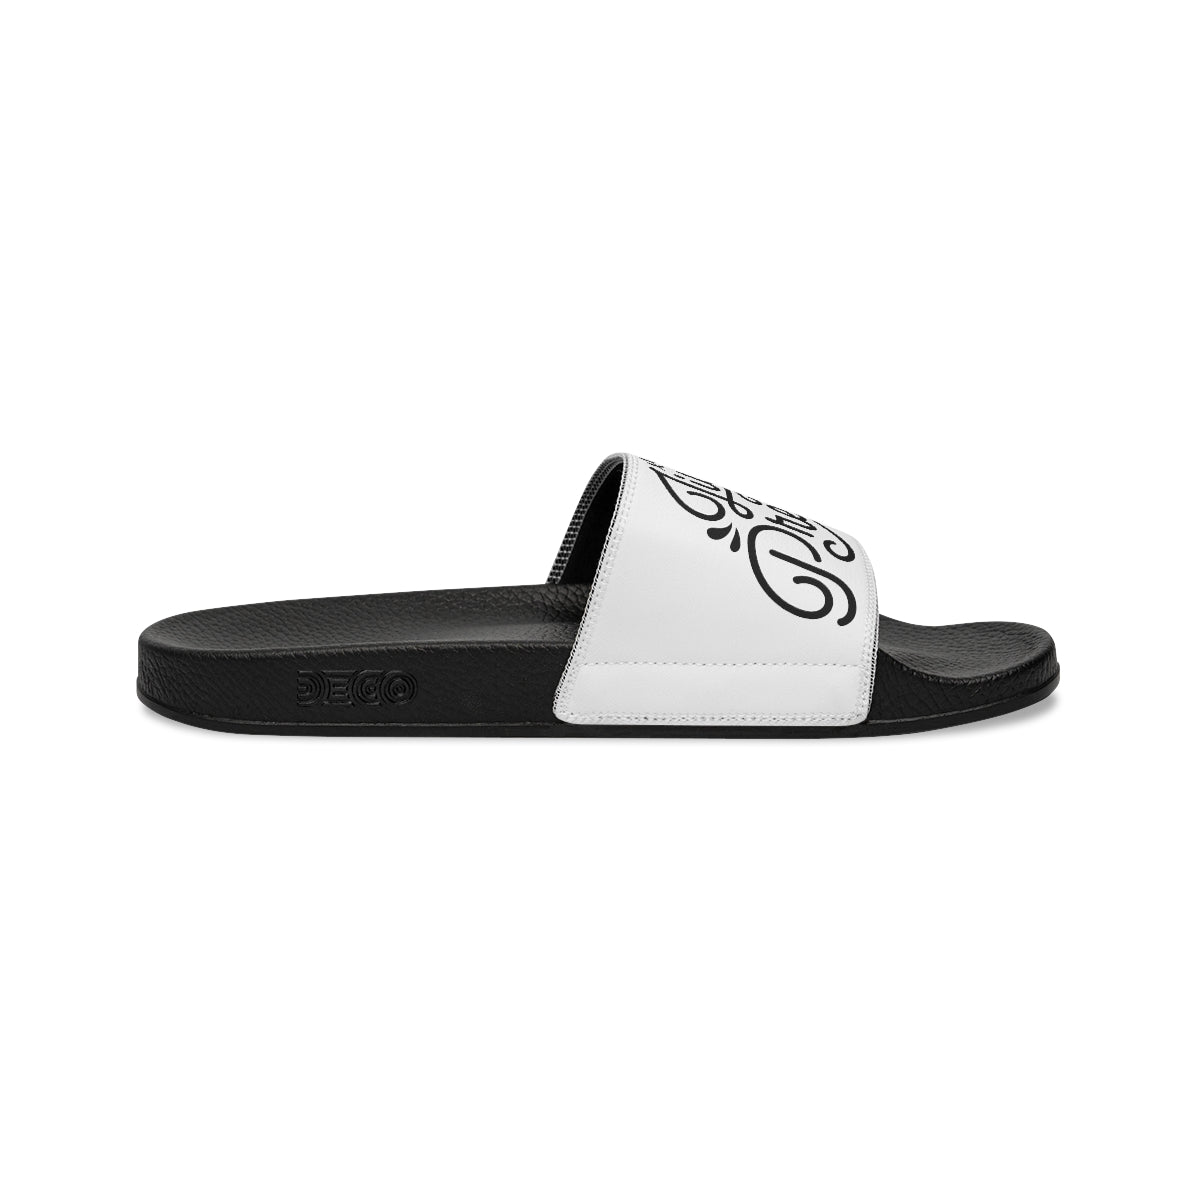 Client's Living My Preferred Life - Men's Slide Sandals